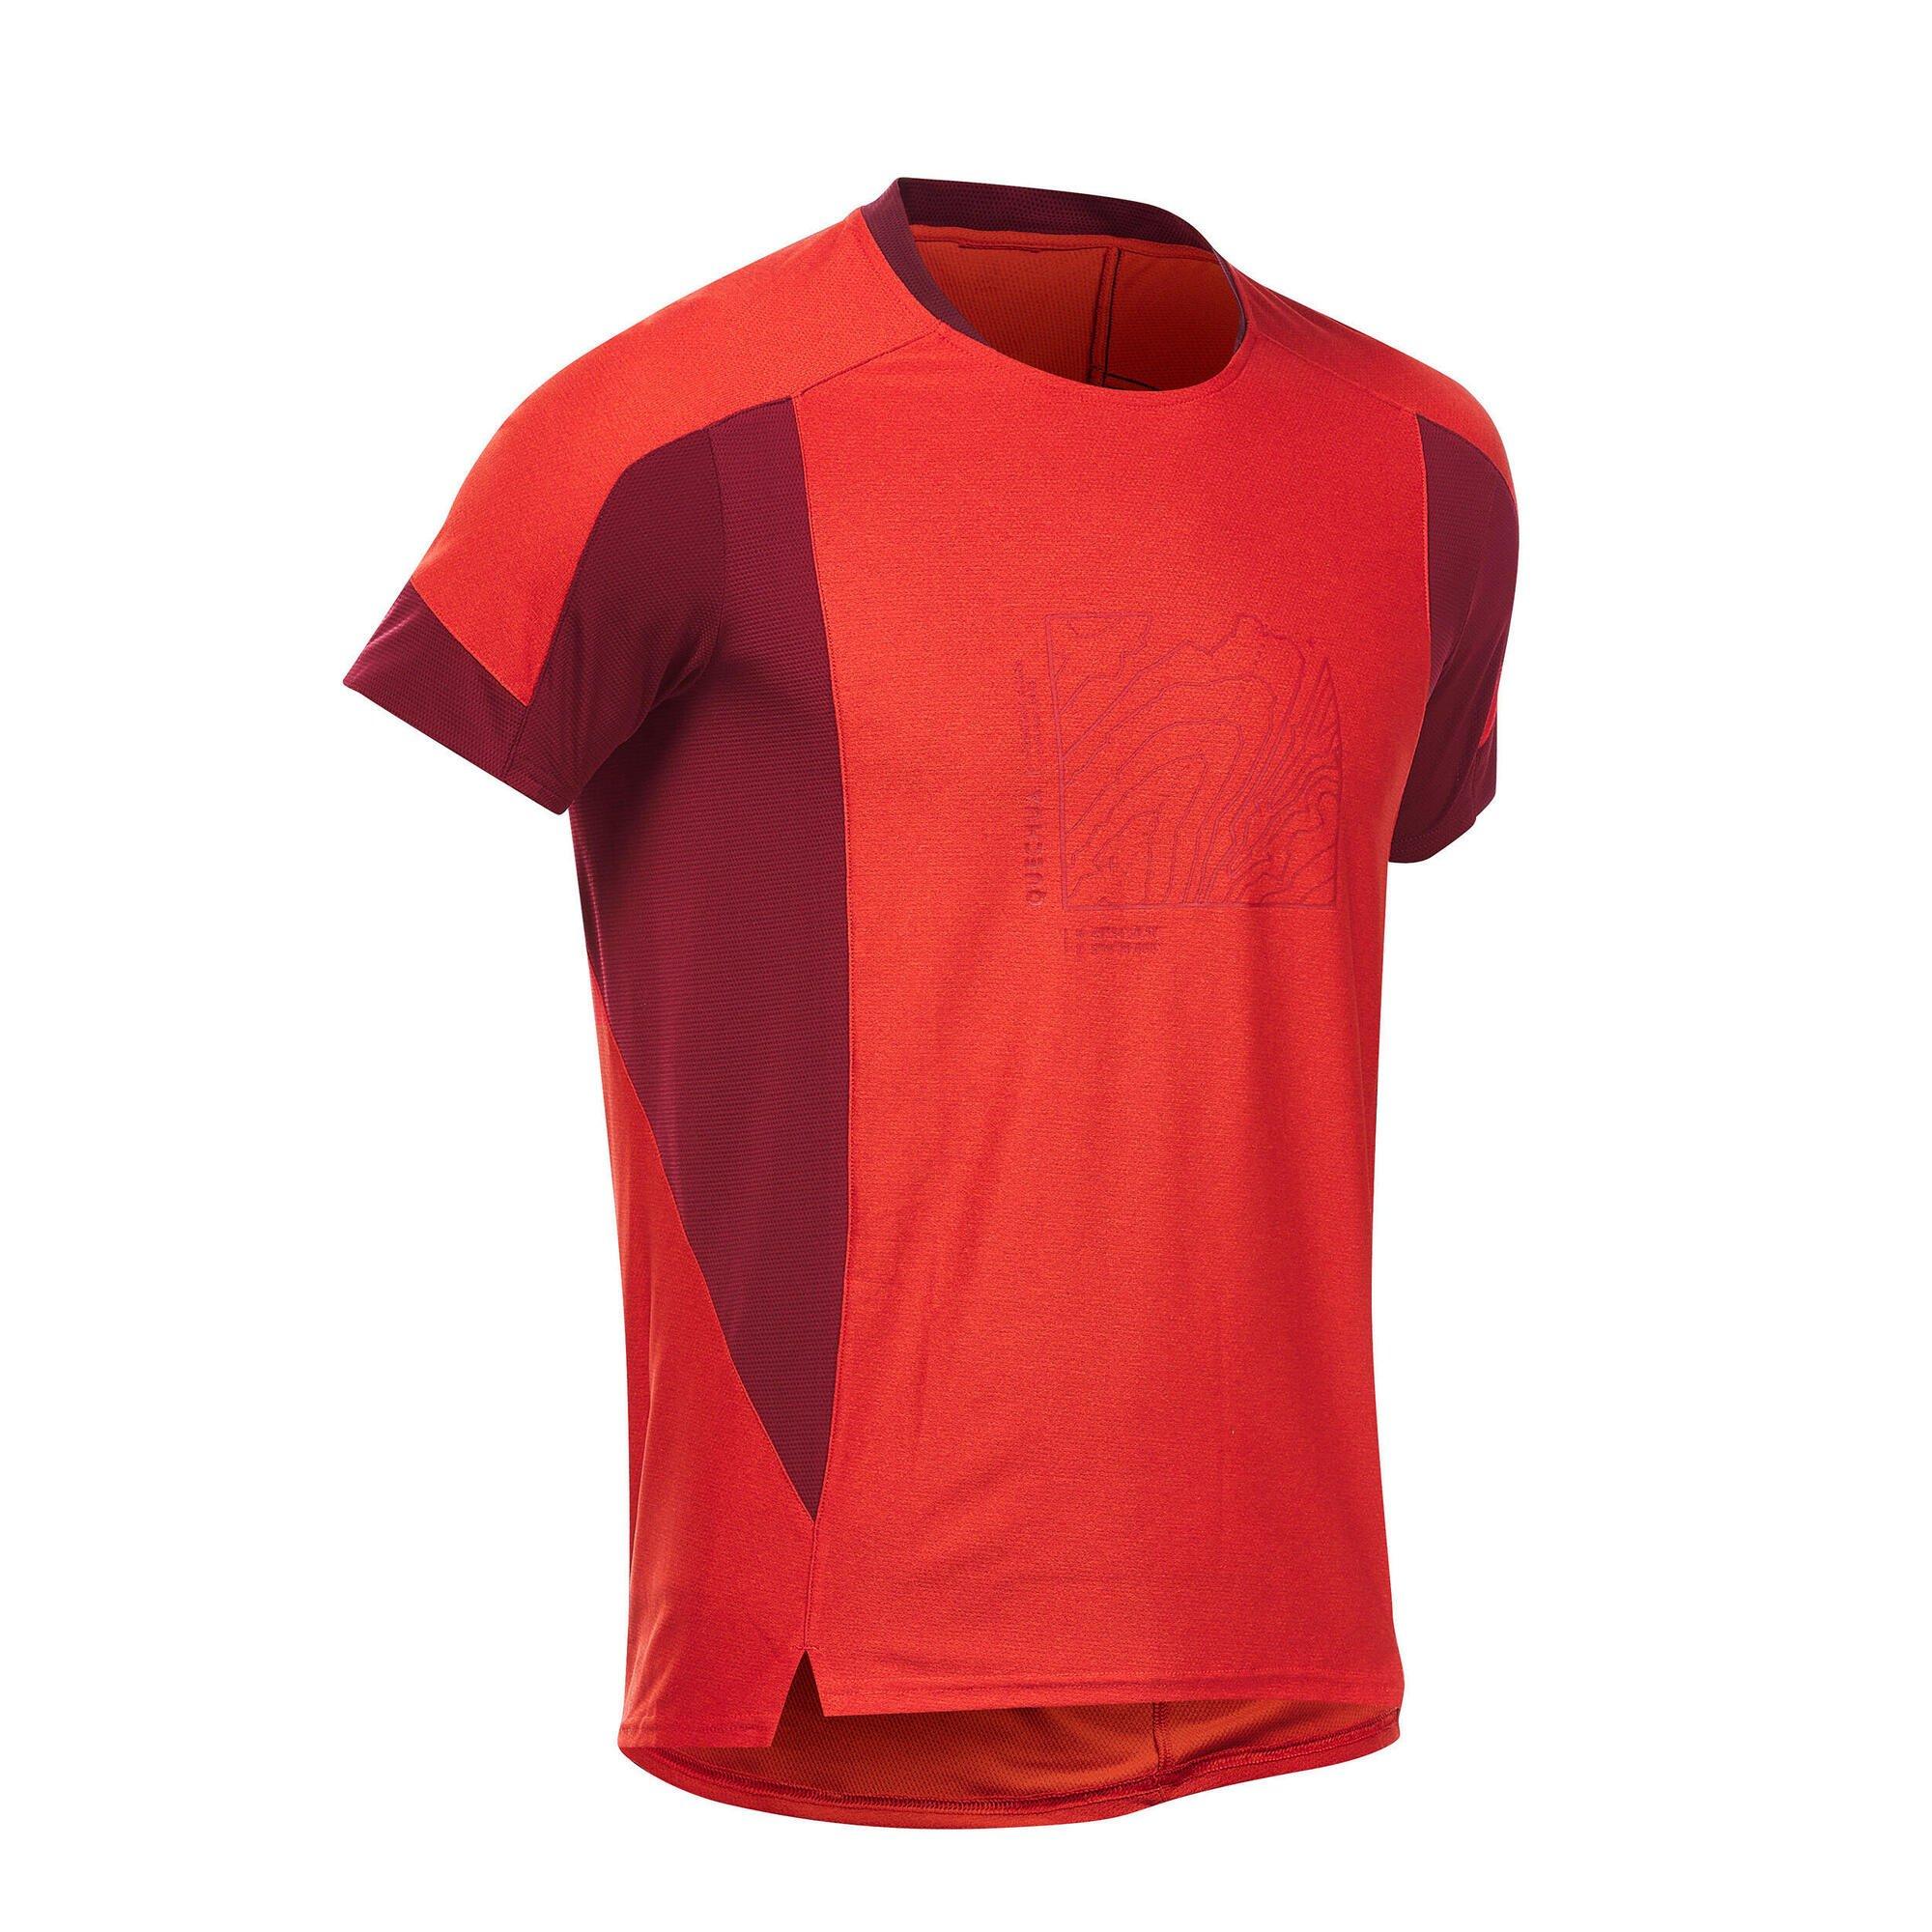 Decathlon Hiking Synthetic Short-Sleeved T-Shirt Mh500